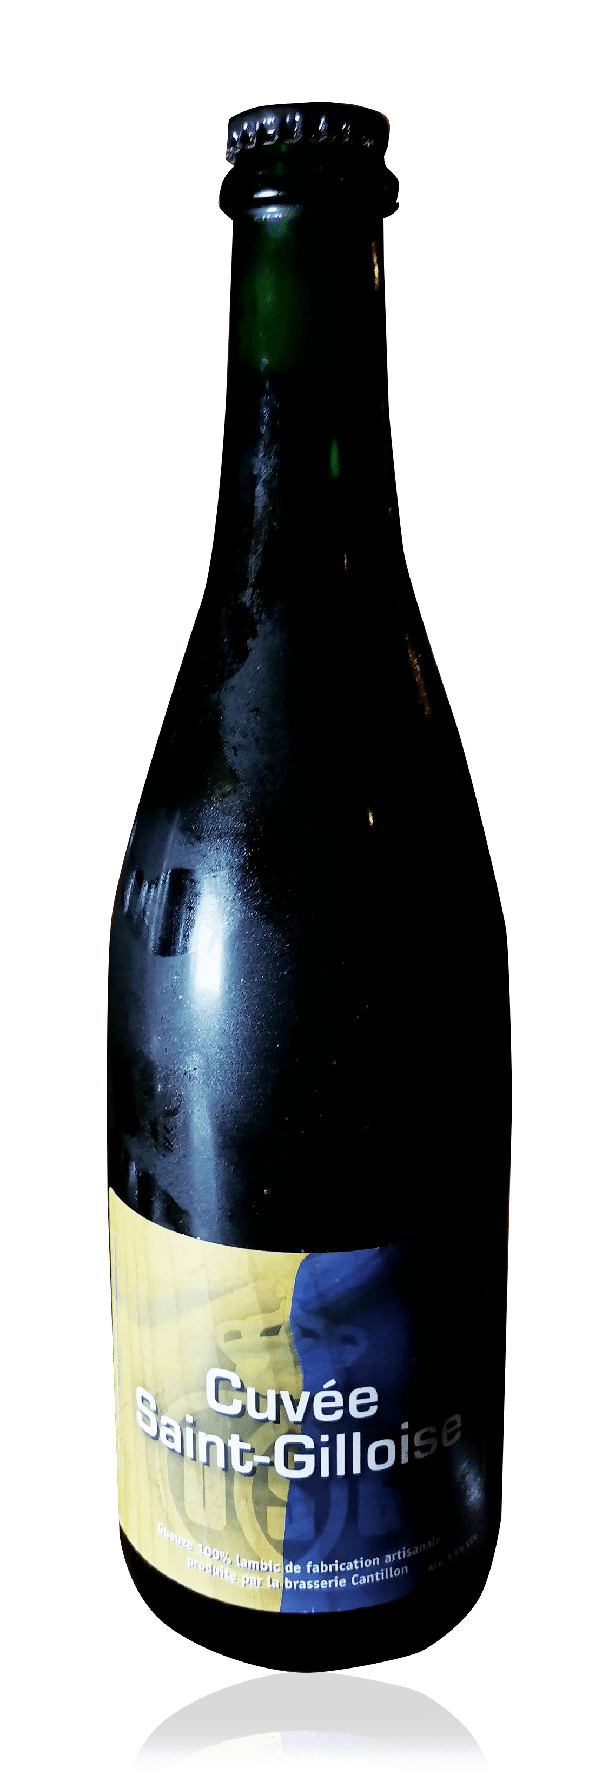 Cantillon Cuveé Saint-Gilloise 2017 + 20 flasche